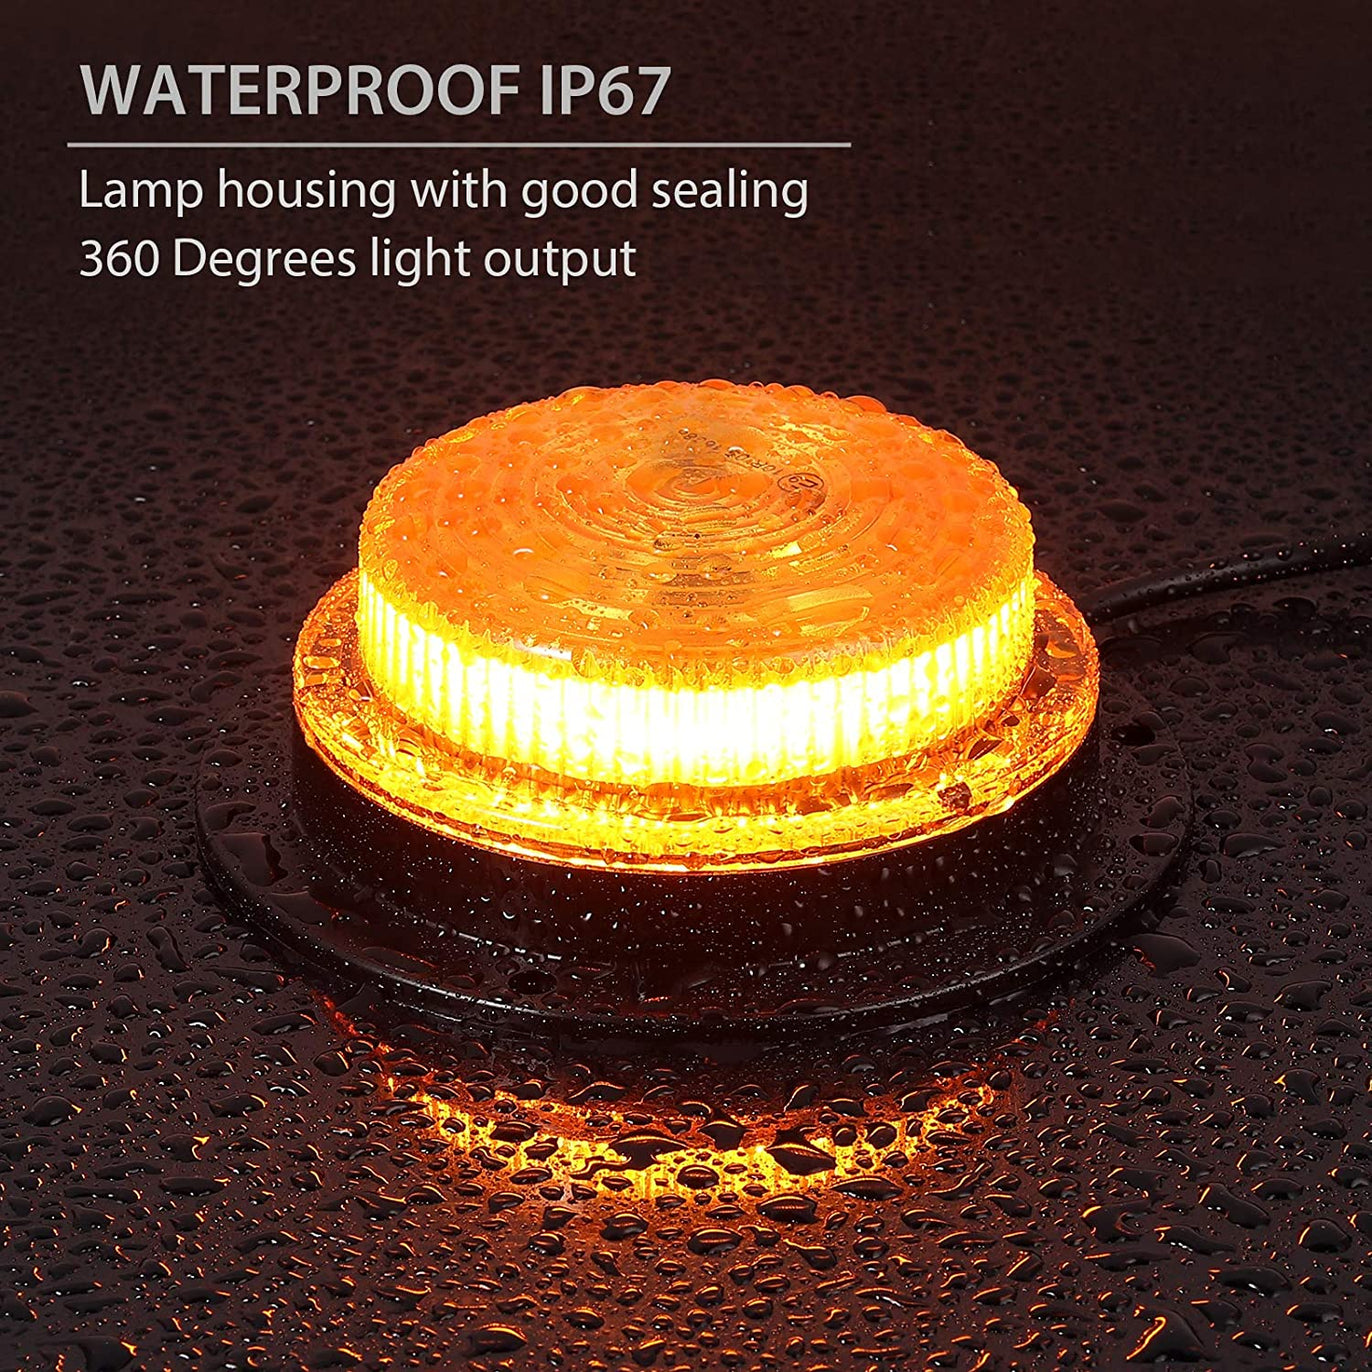 PROZOR 20 LEDs Recovery Warning Magnetic Beacon Flashing Light